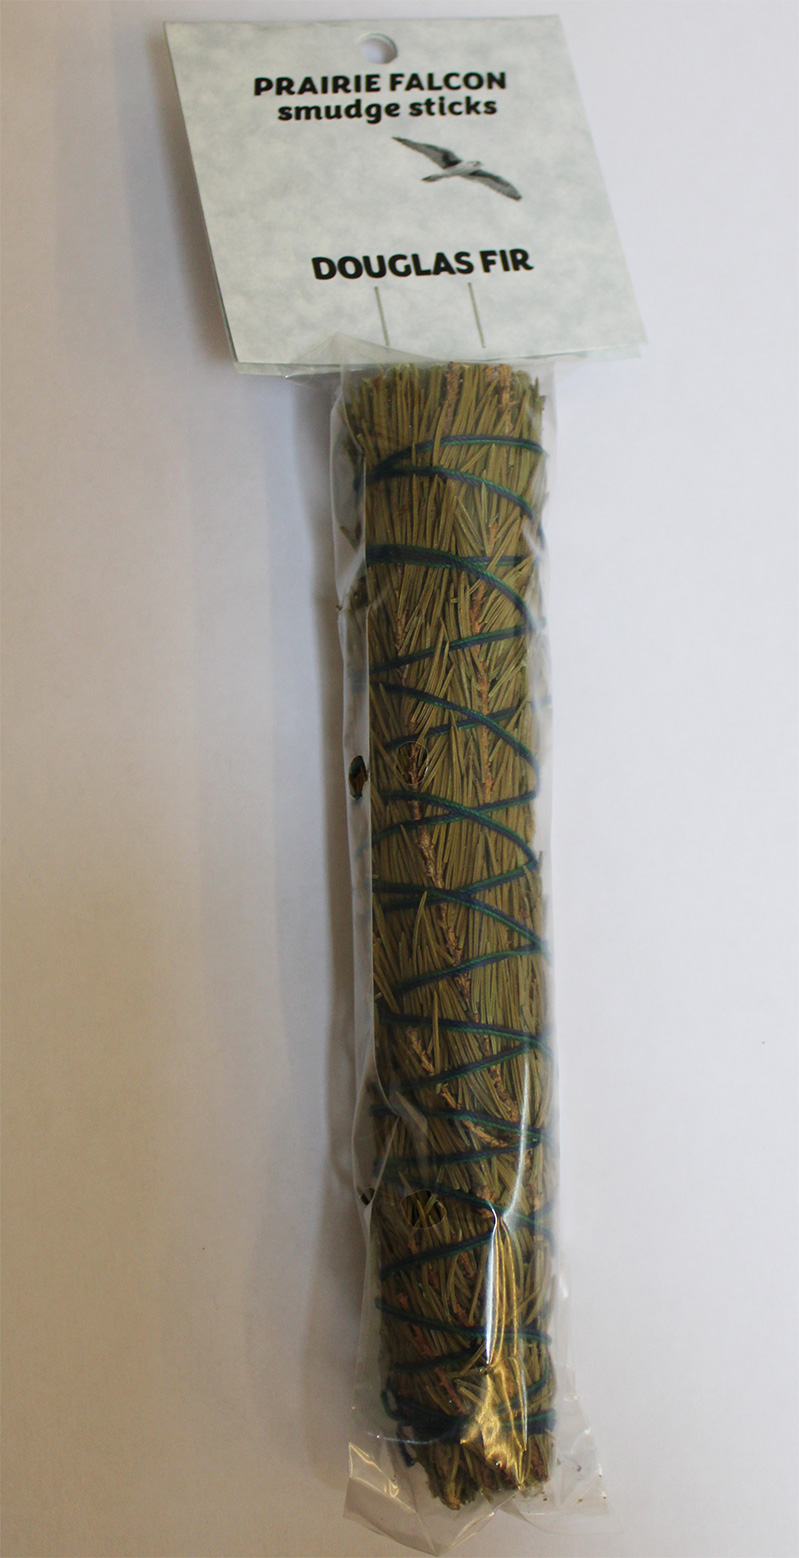 Douglas Fir 10 inch Smudge Stick